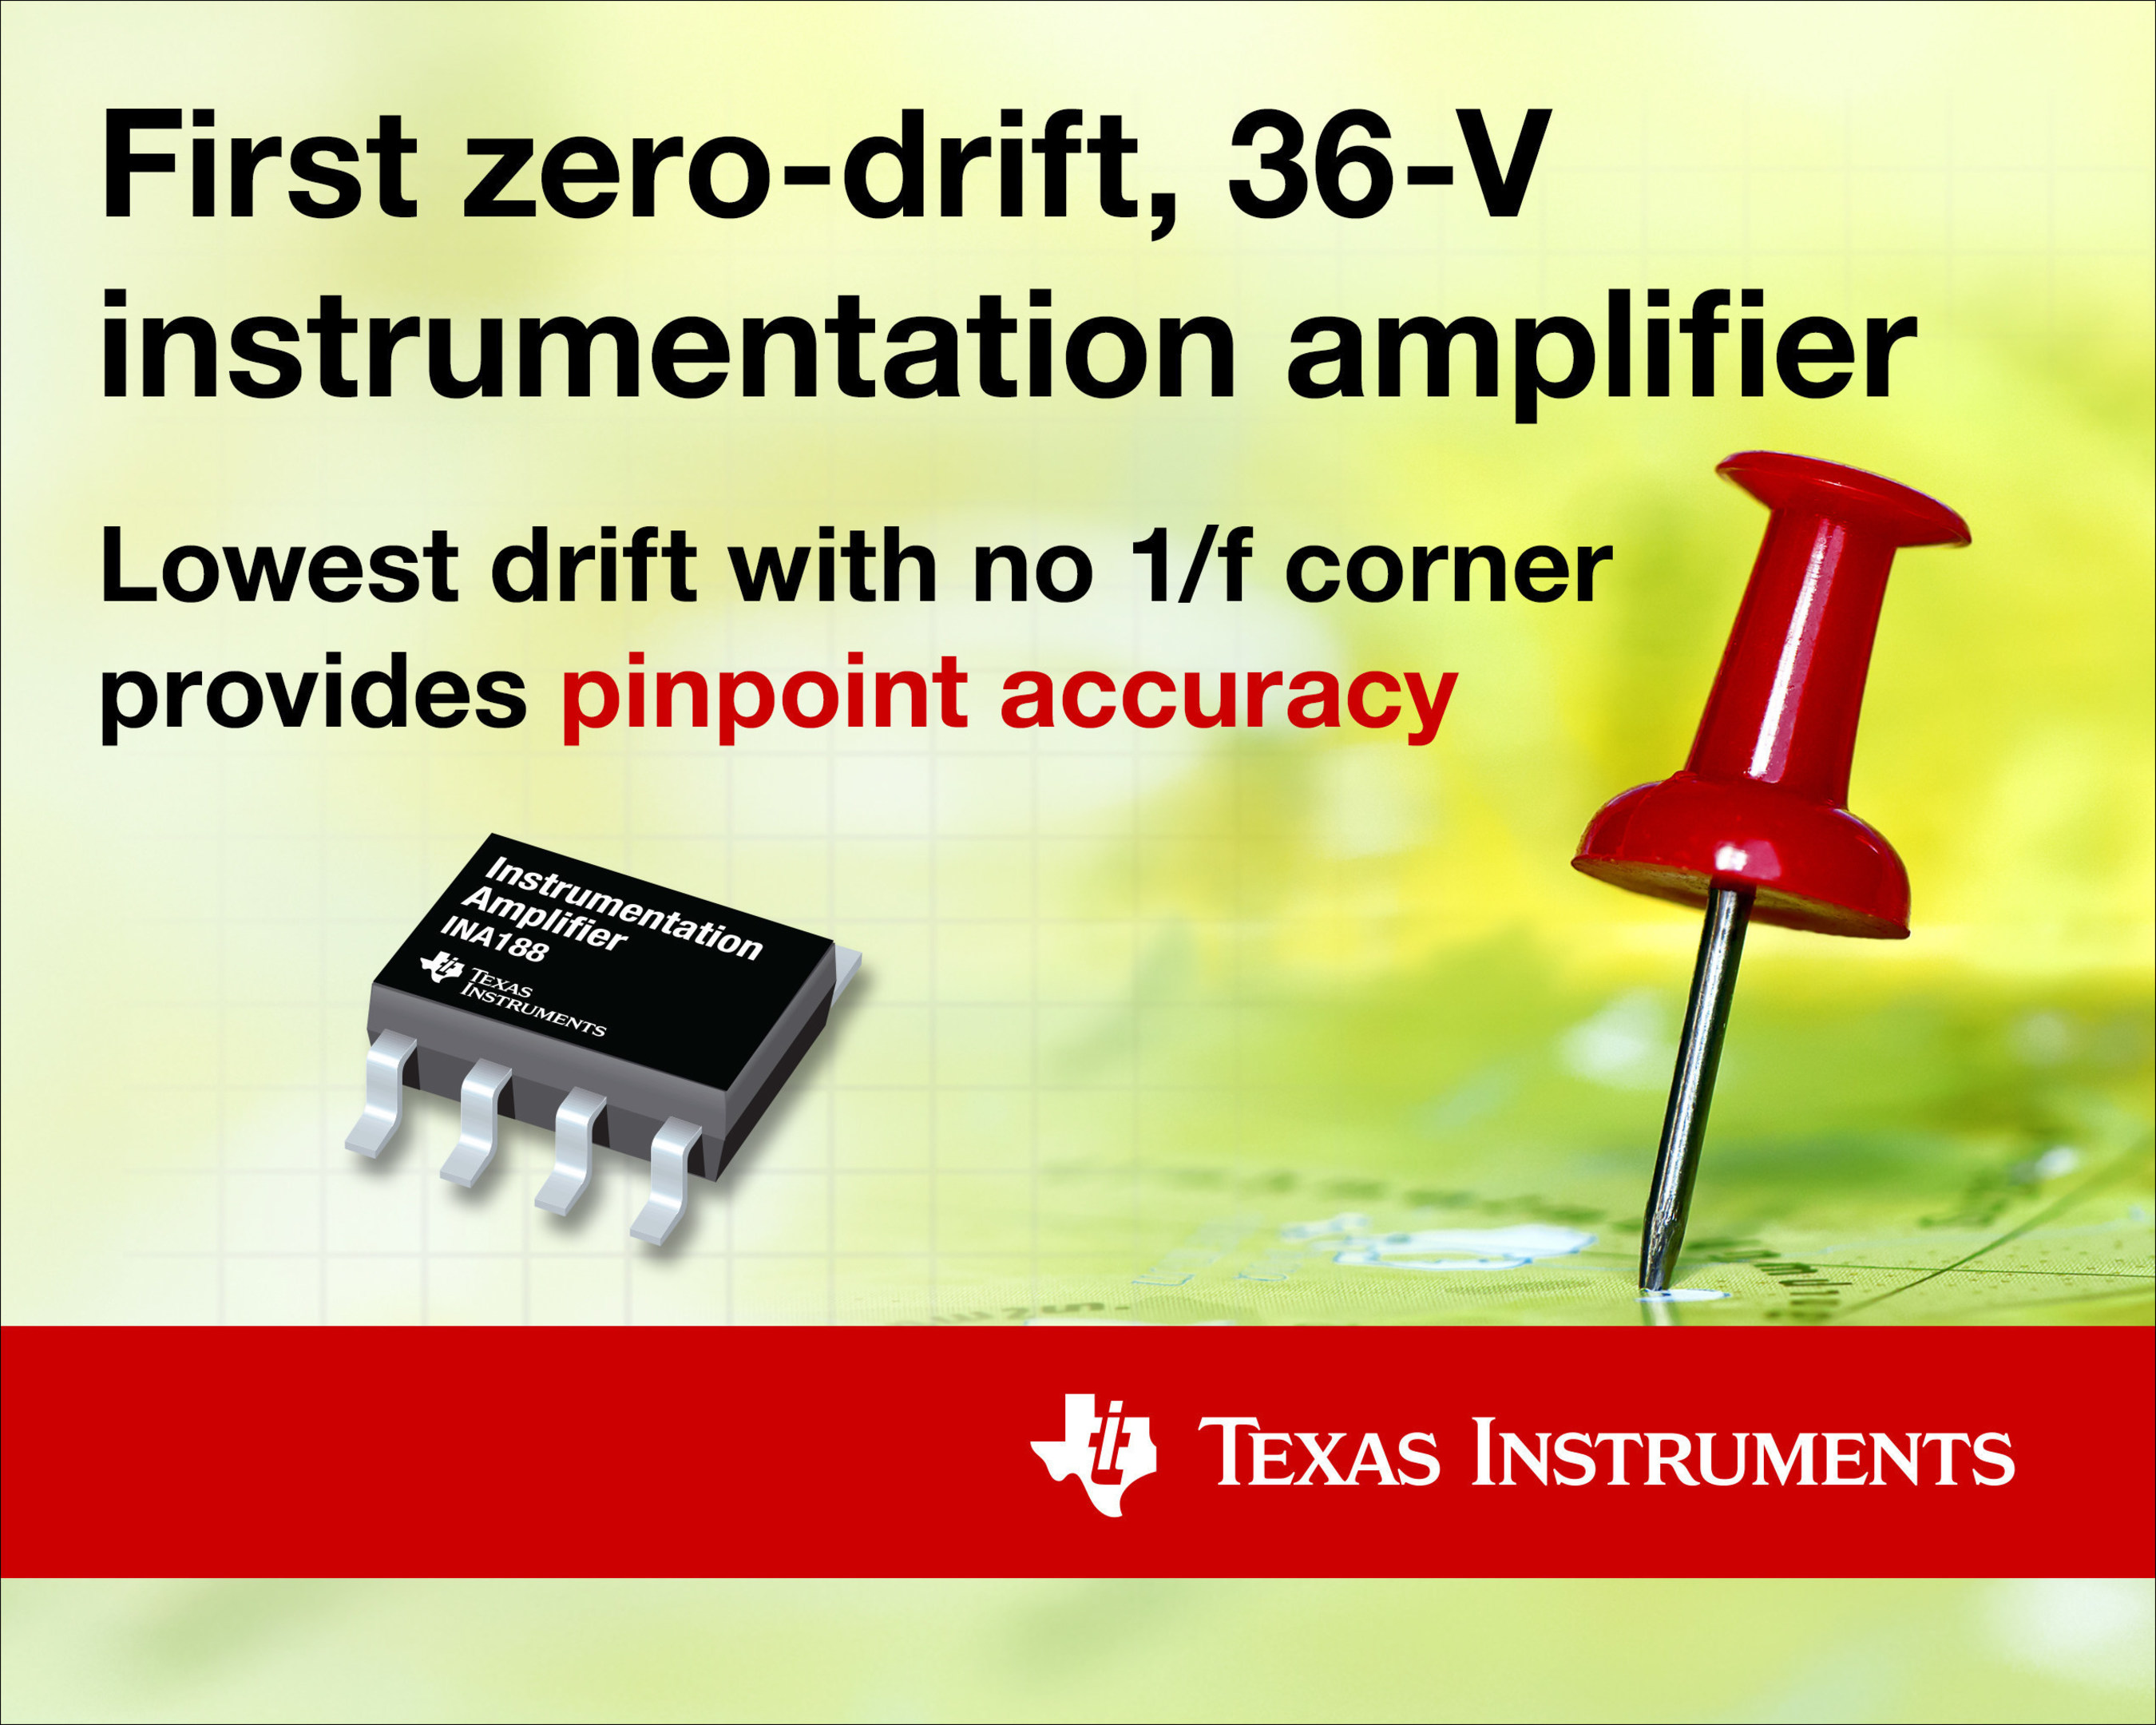 First zero-drift, 36-V instrumentation amplifier